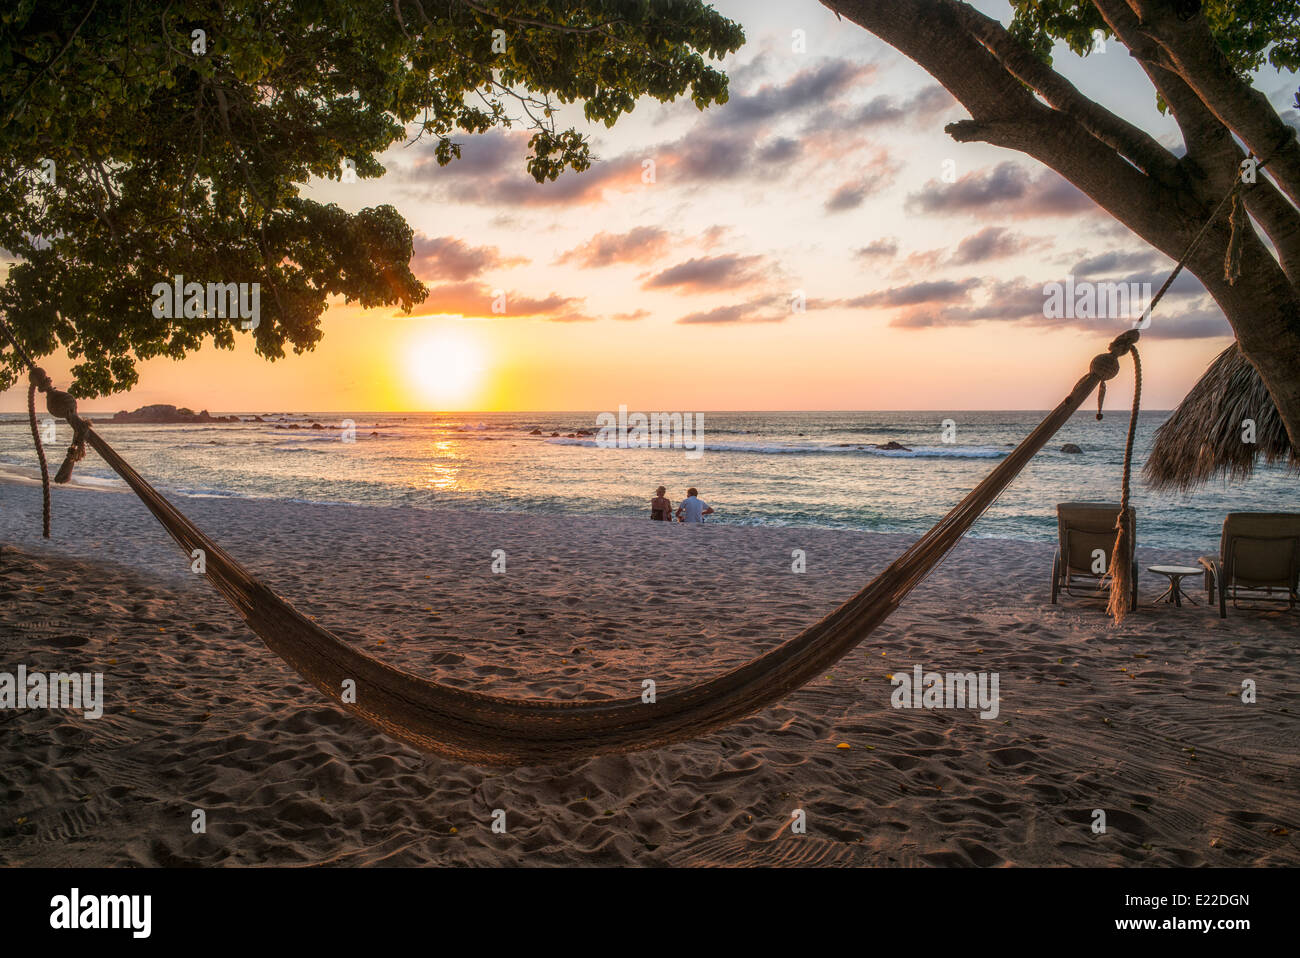 Sunset on beach with hammock at Punta Mita, Mexico. Stock Photo